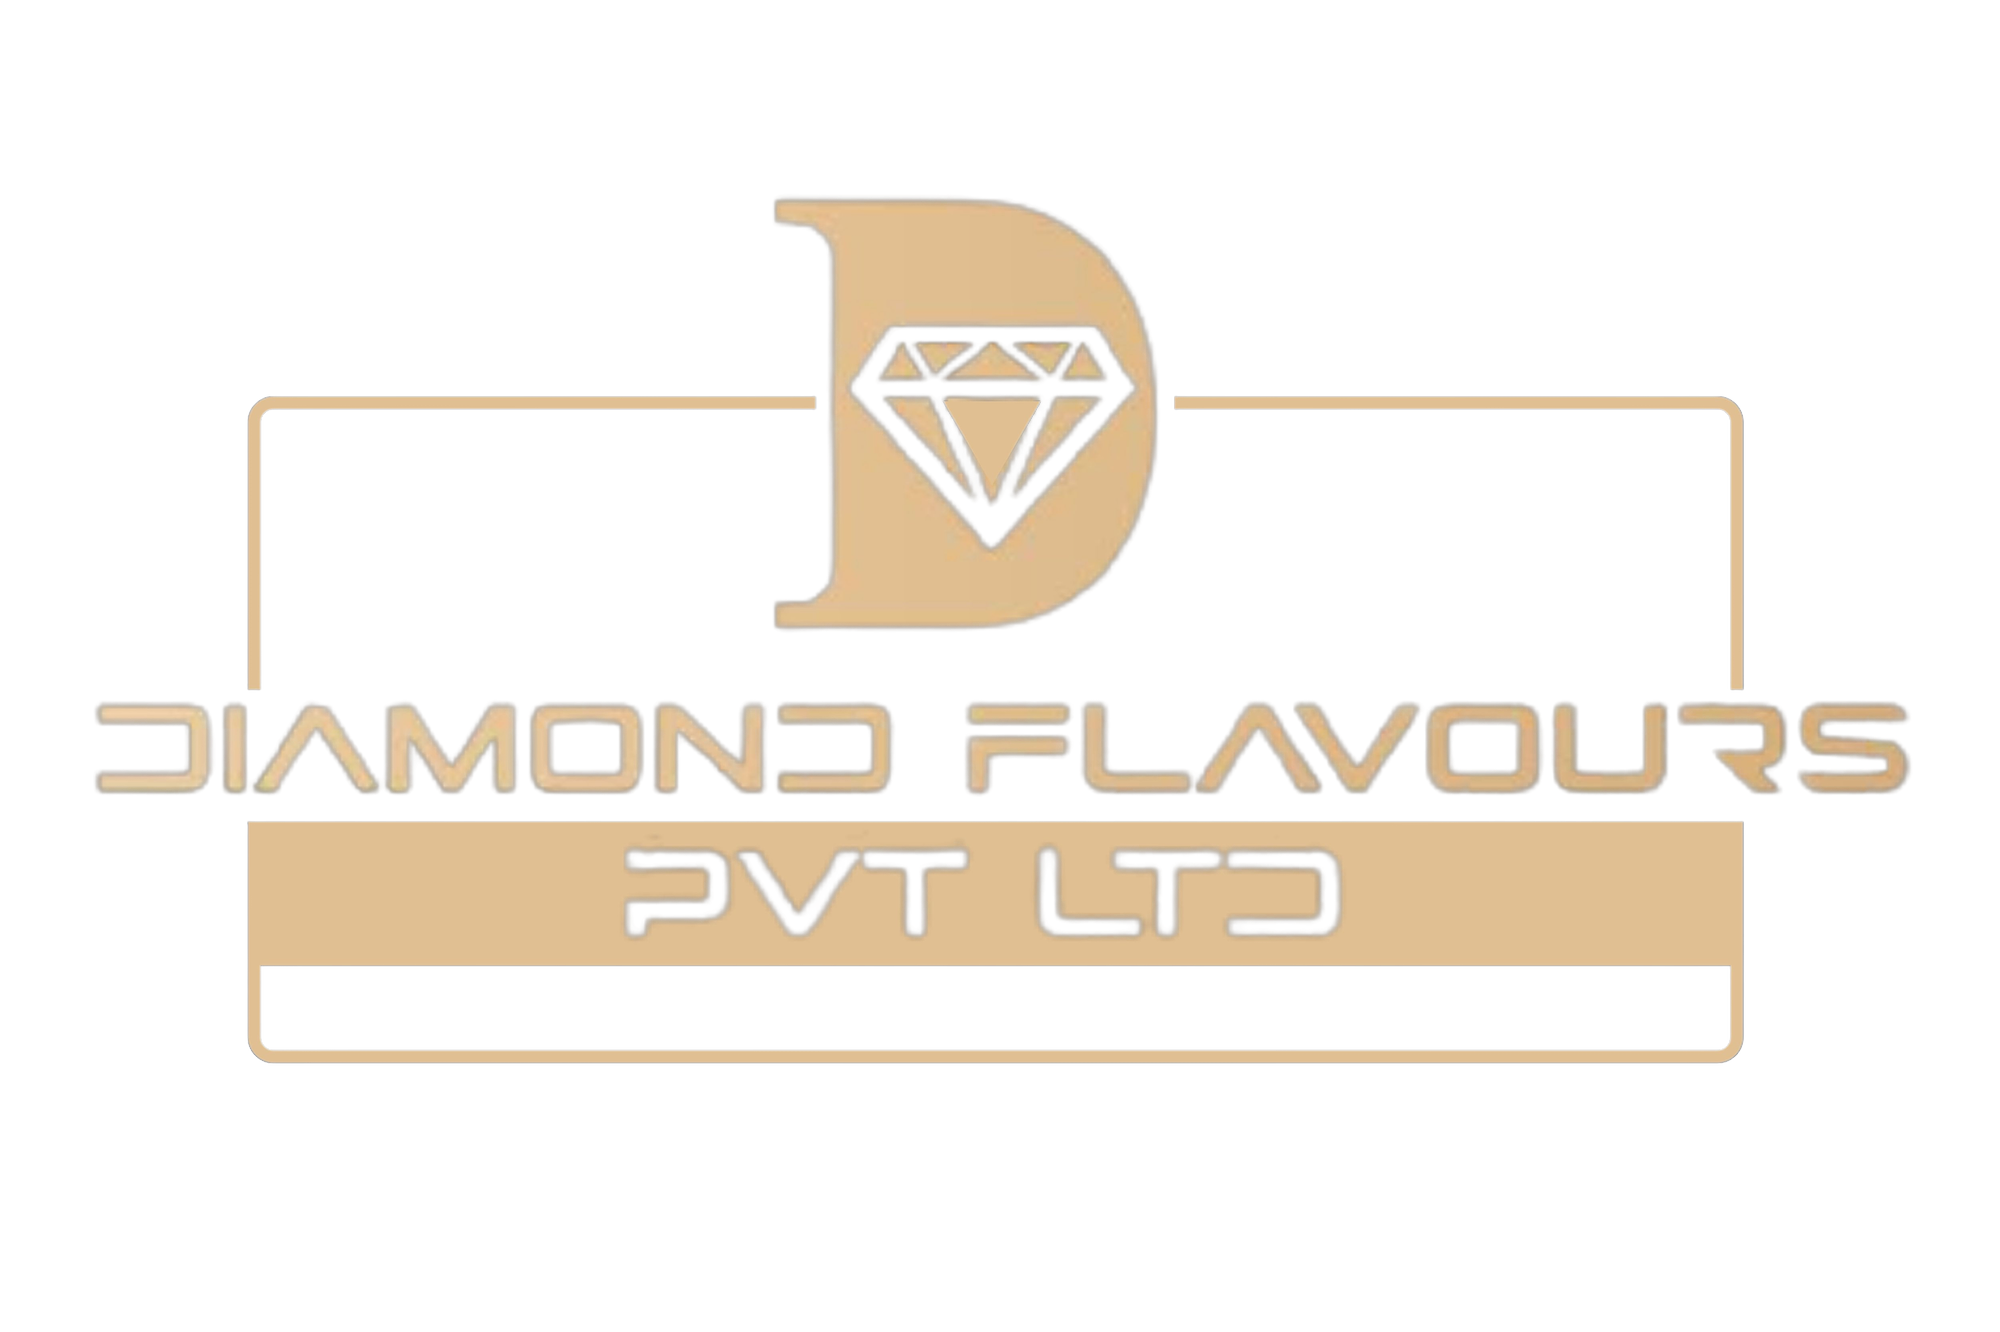 Diamond Flavours Pvt Ltd